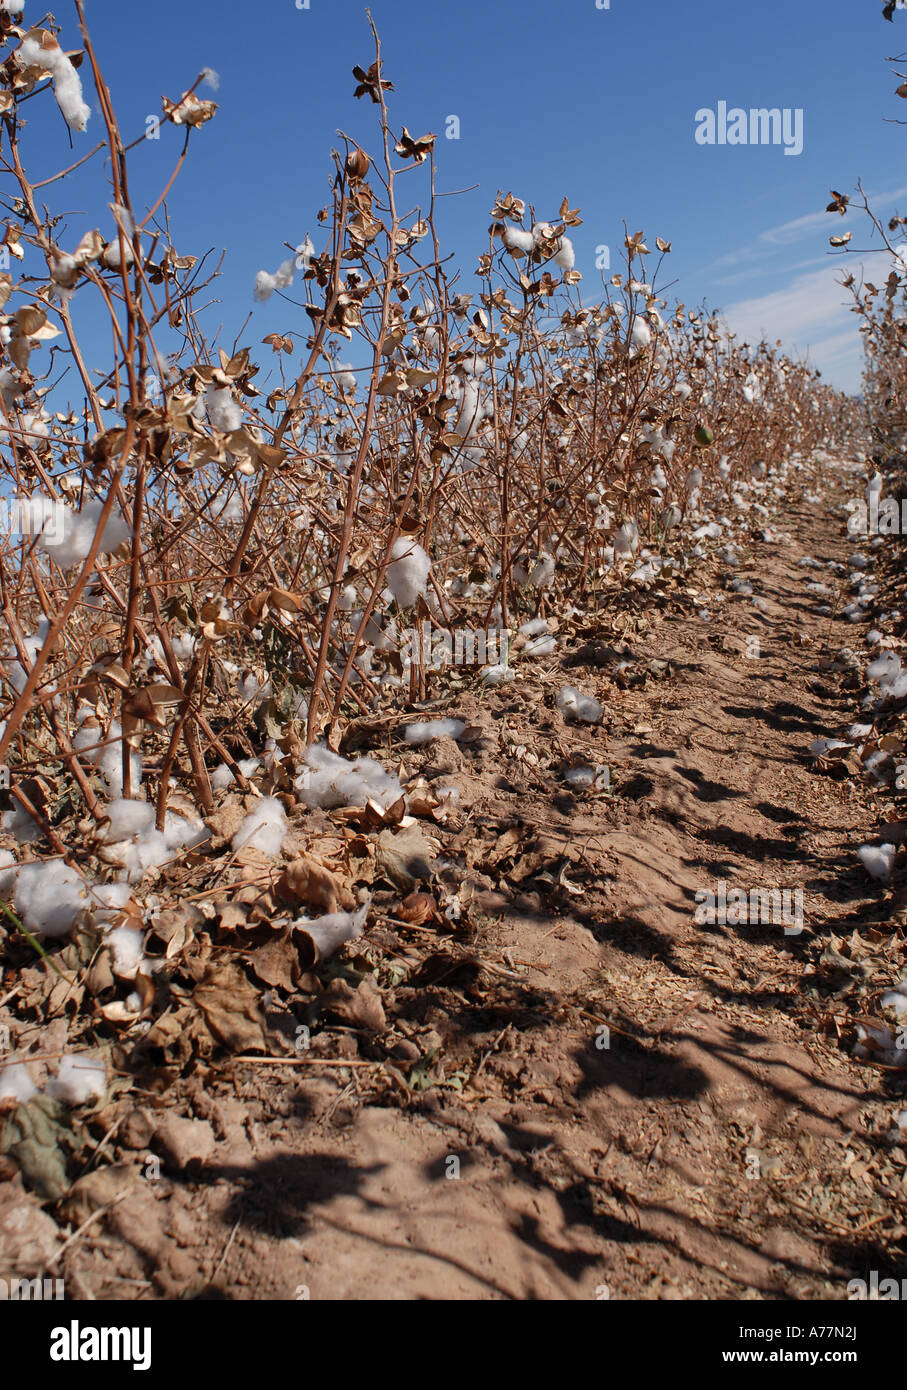 Cotton fields outside of Blythe, California Stock Photo